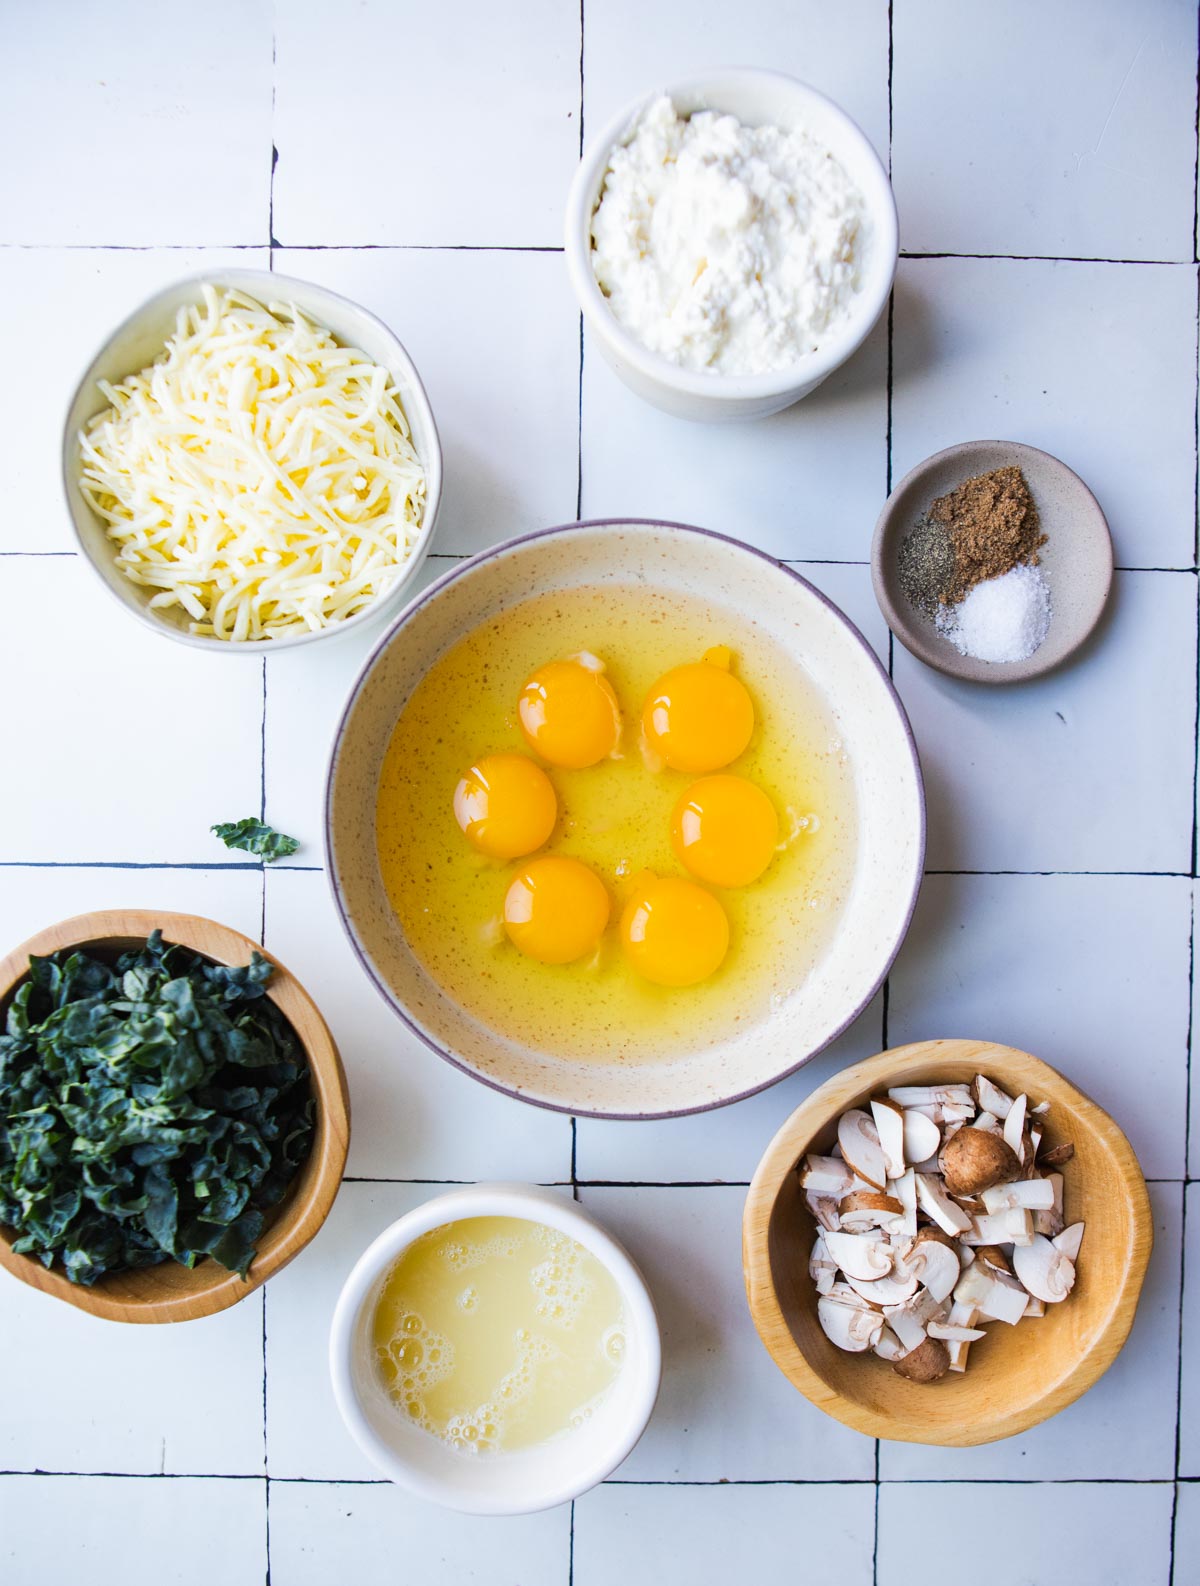 raw ingredients to make kale mushroom egg bites in small bowls